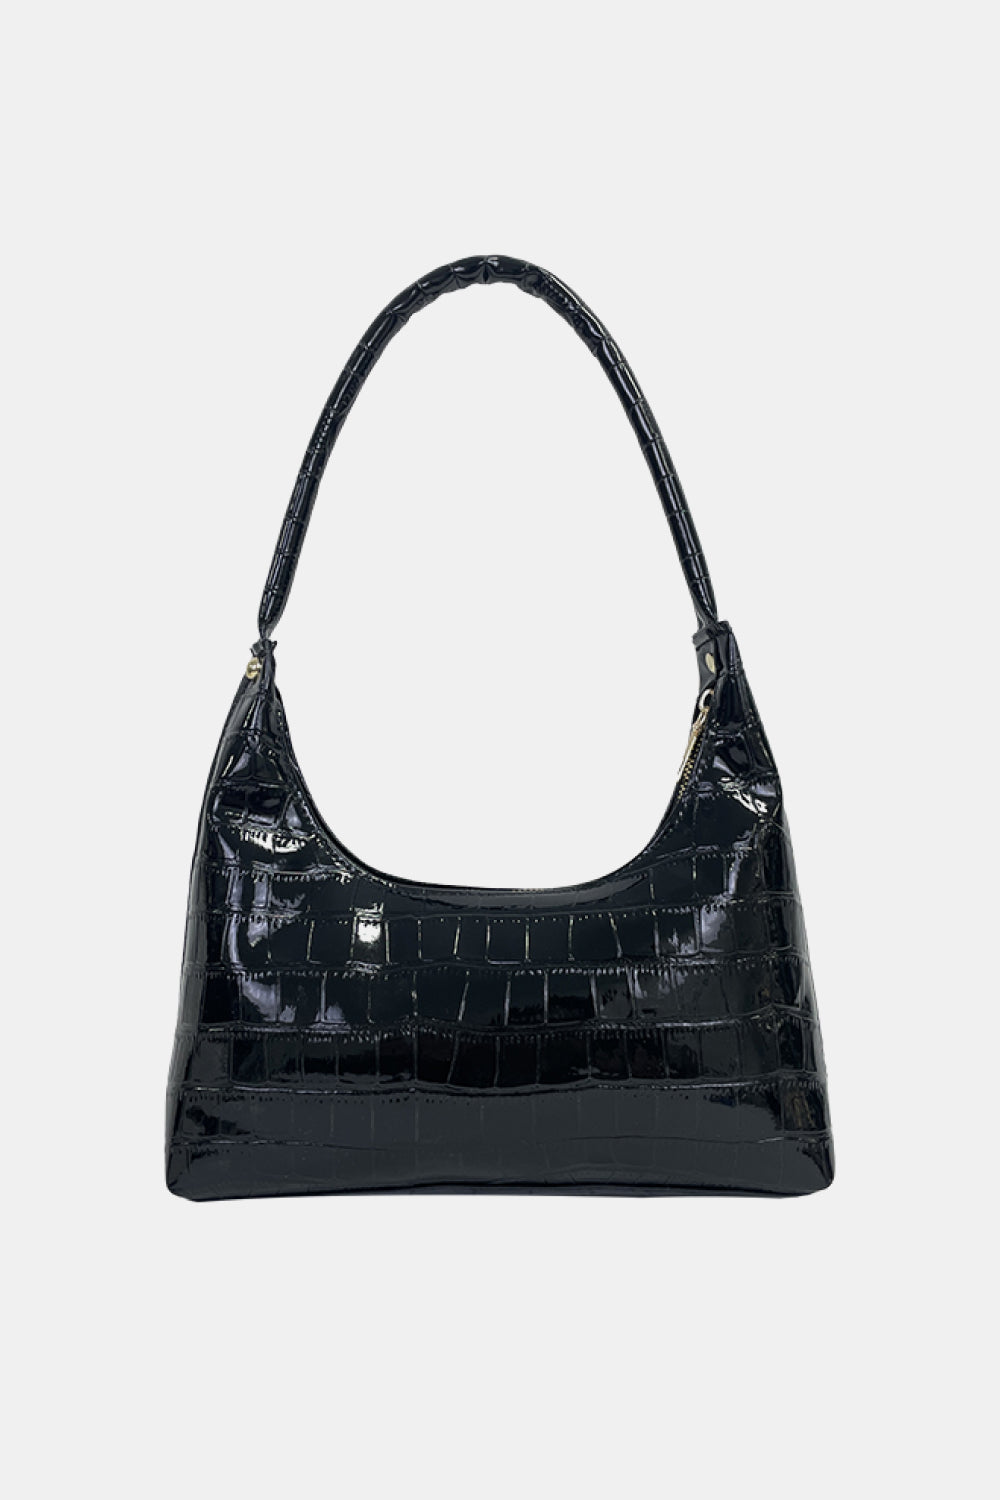 Charming Charlie Women's Shoulder Bags - Black